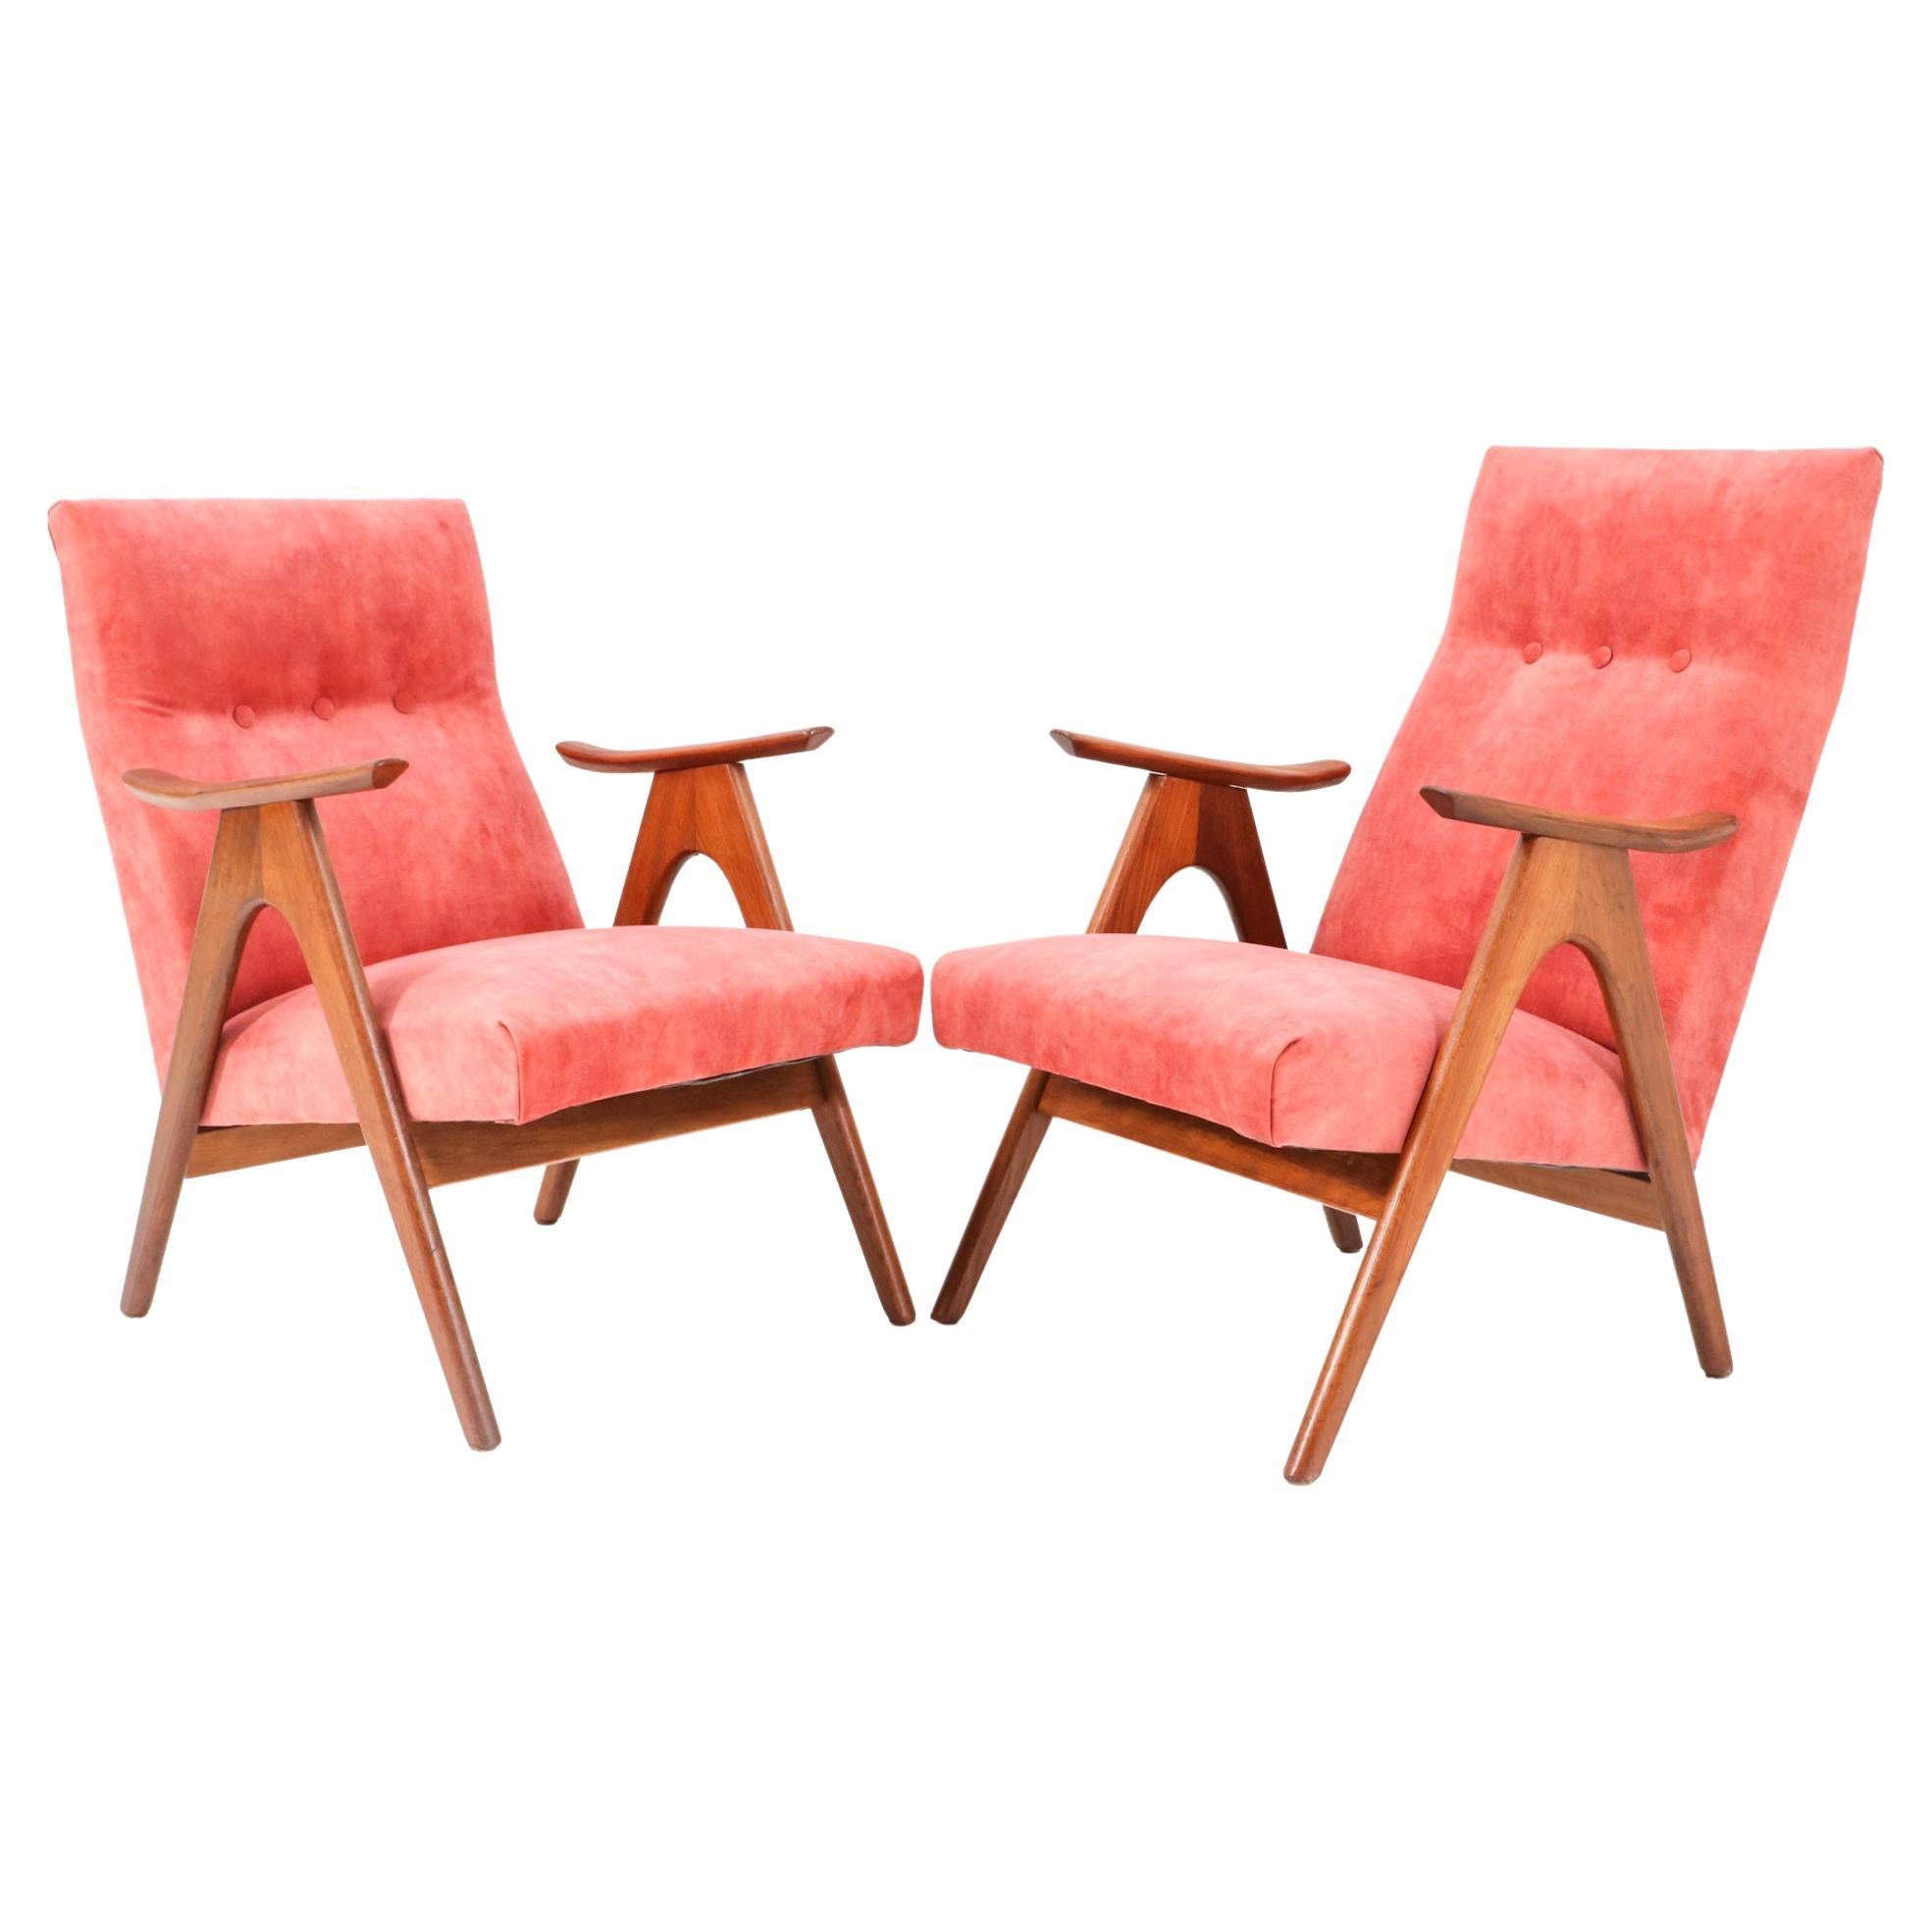 Two Teak Mid-Century Modern Lounge Chairs, 1960s